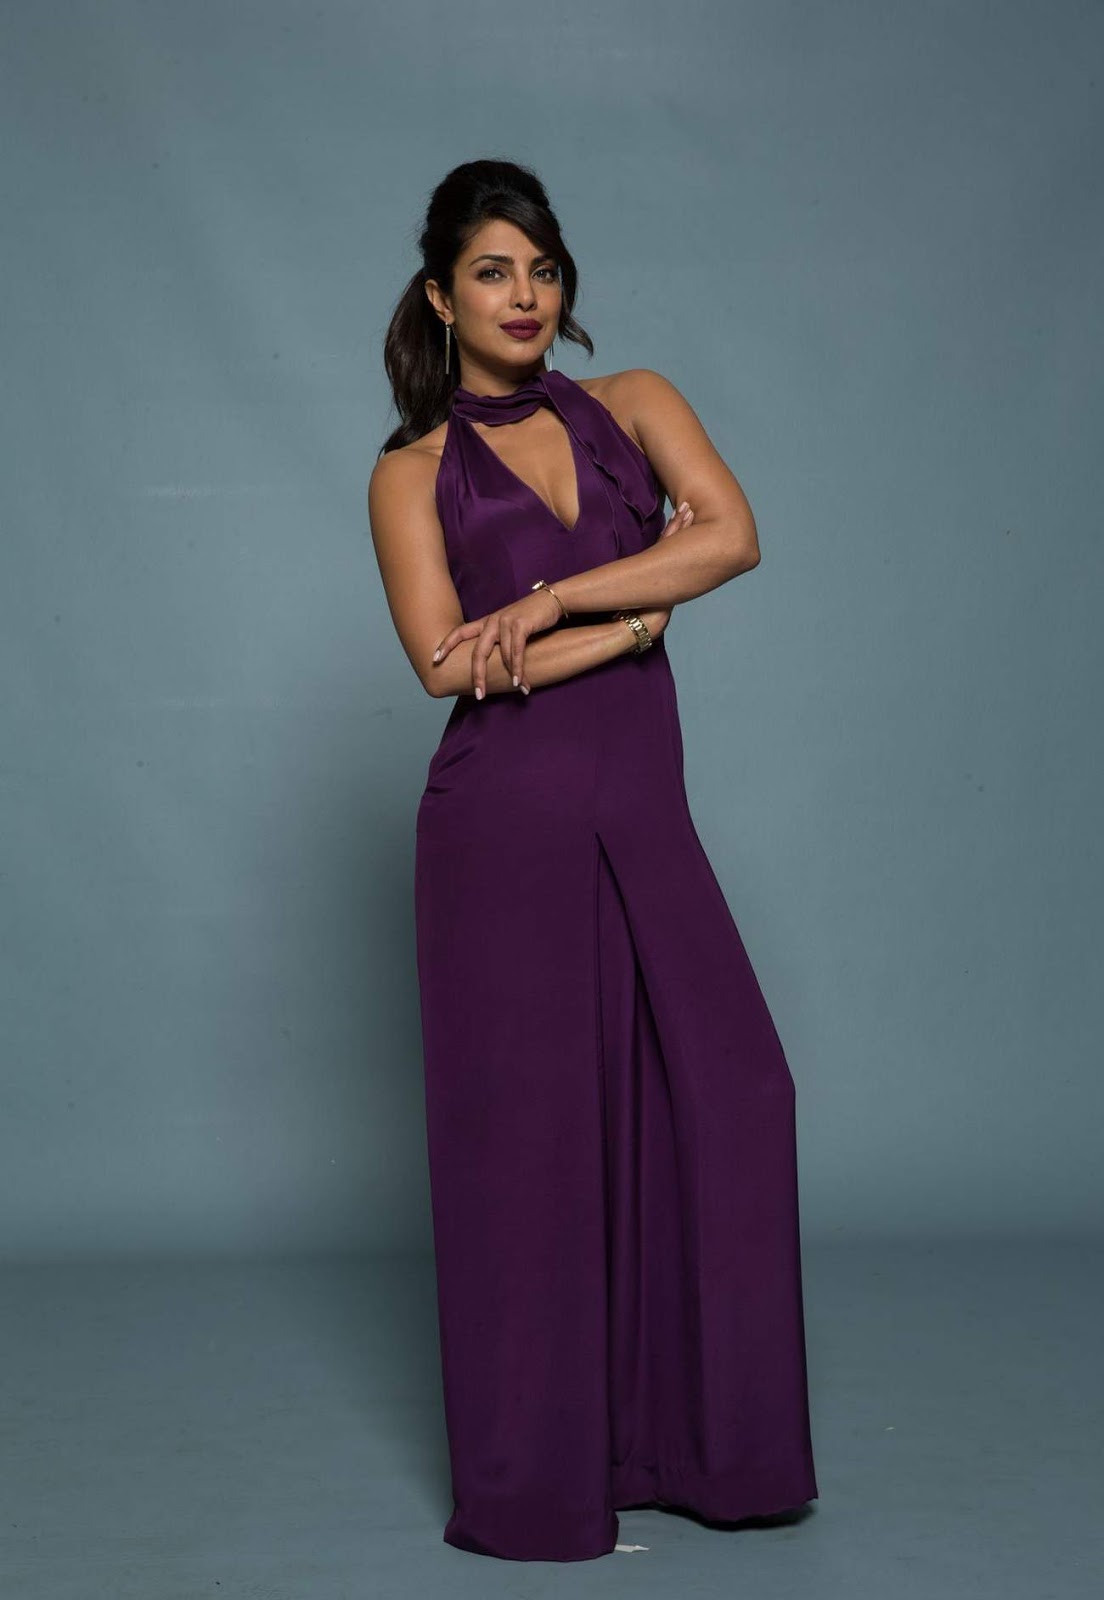 Priyanka Chopra Super Sexy Baywatch 2017 Promoshoot (Part 1)